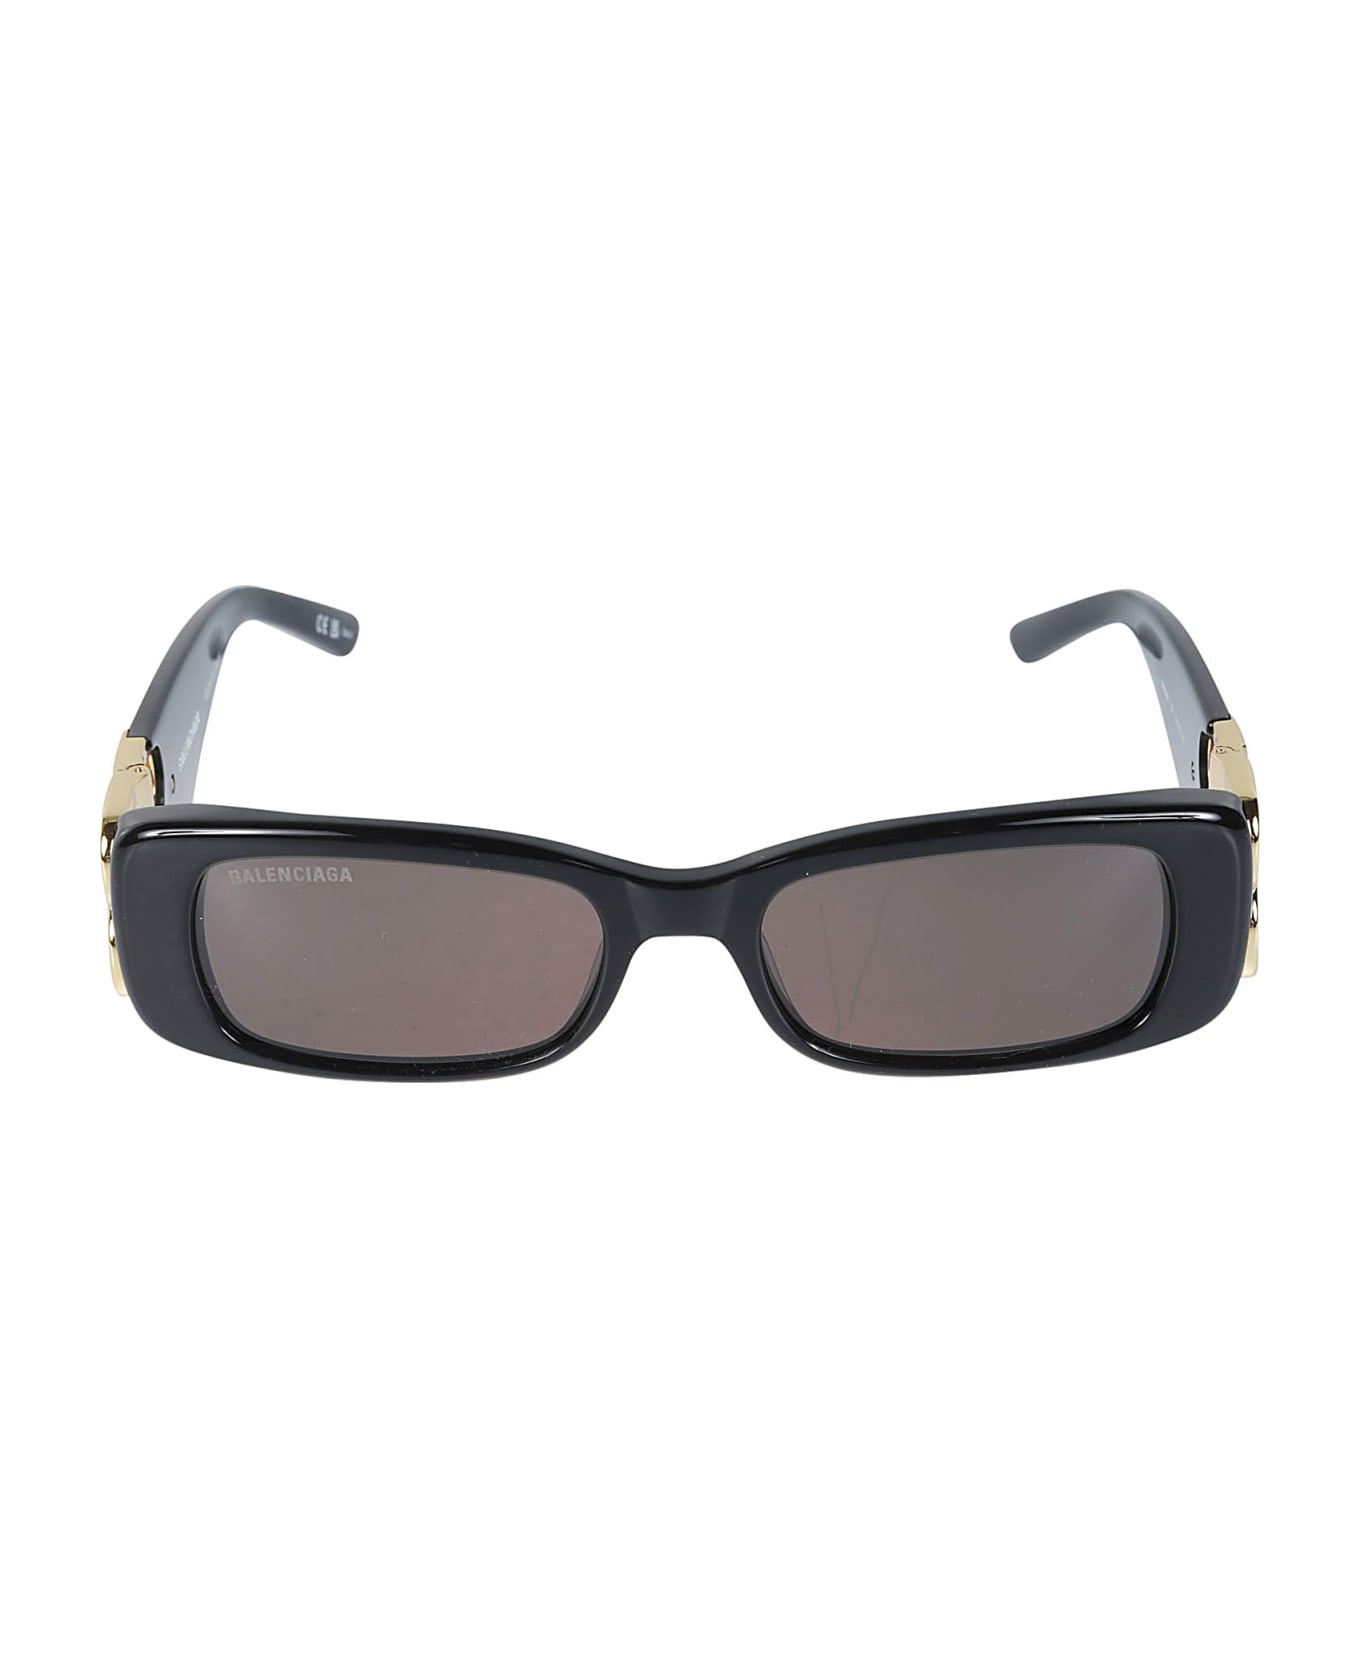 Balenciaga Eyewear Everyday Sunglasses - Black/Gold サングラス